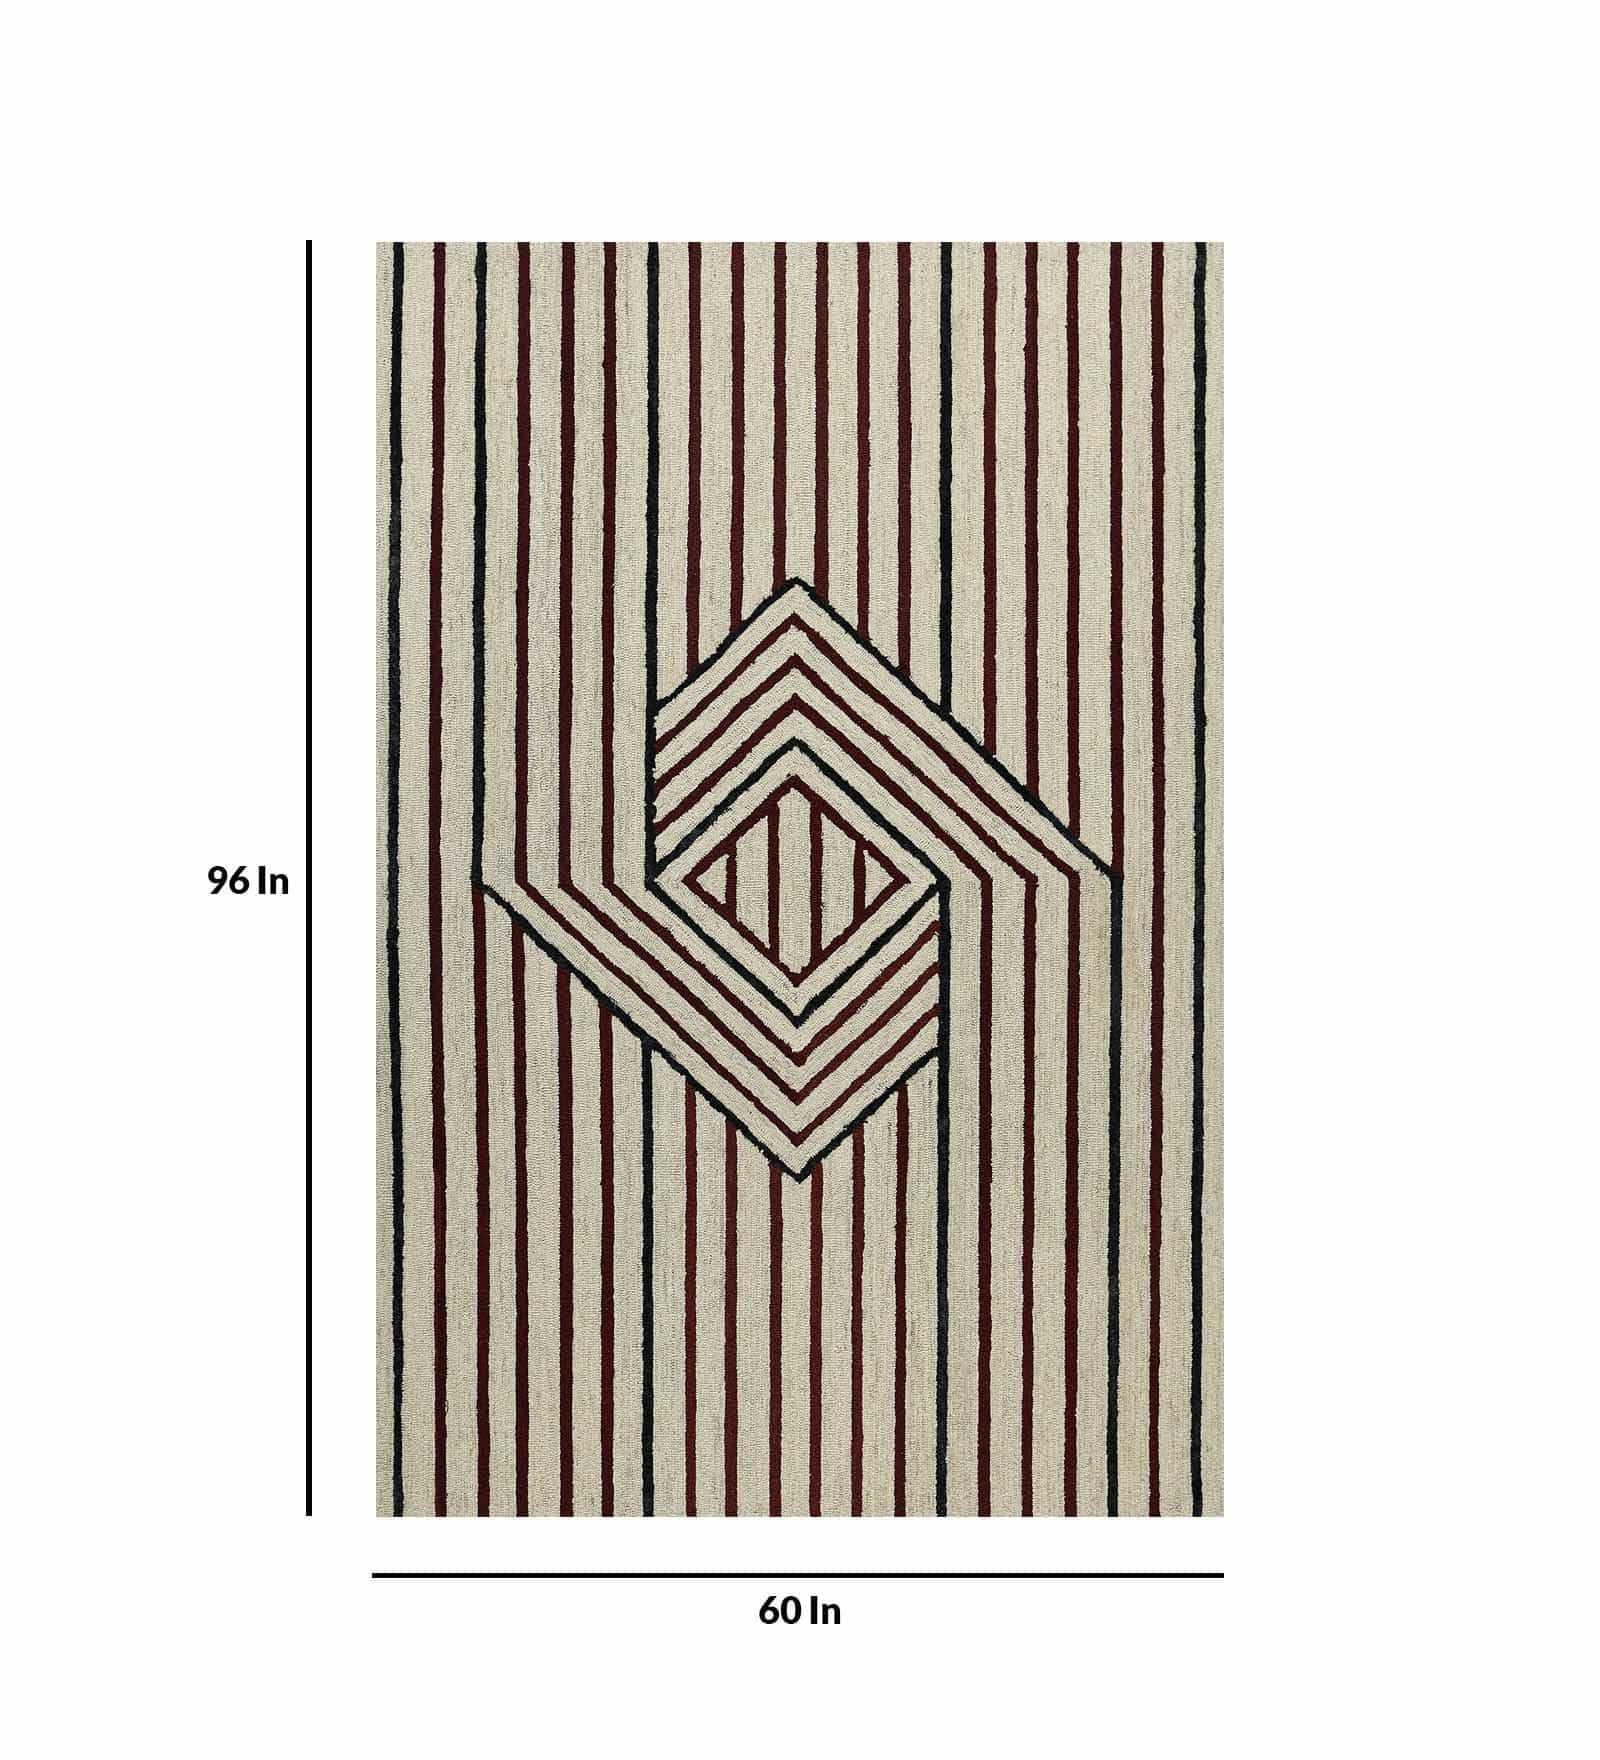 IVORY Wool & Viscose Canyan 5x8 Feet  Hand-Tufted Carpet - Rug